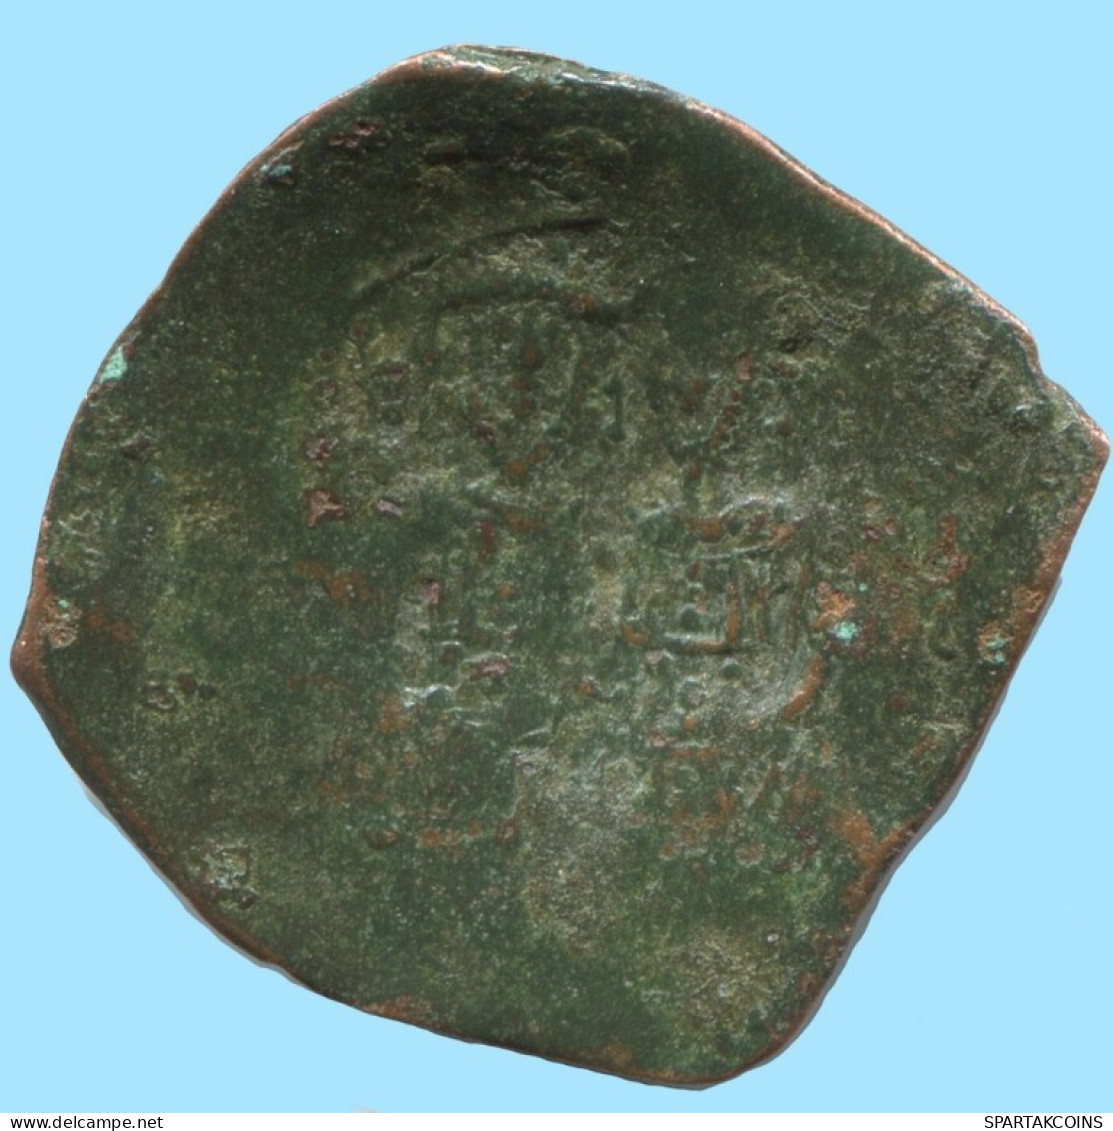 ALEXIOS III ANGELOS ASPRON TRACHY BILLON BYZANTINE Coin 2g/25mm #AB453.9.U.A - Byzantinische Münzen